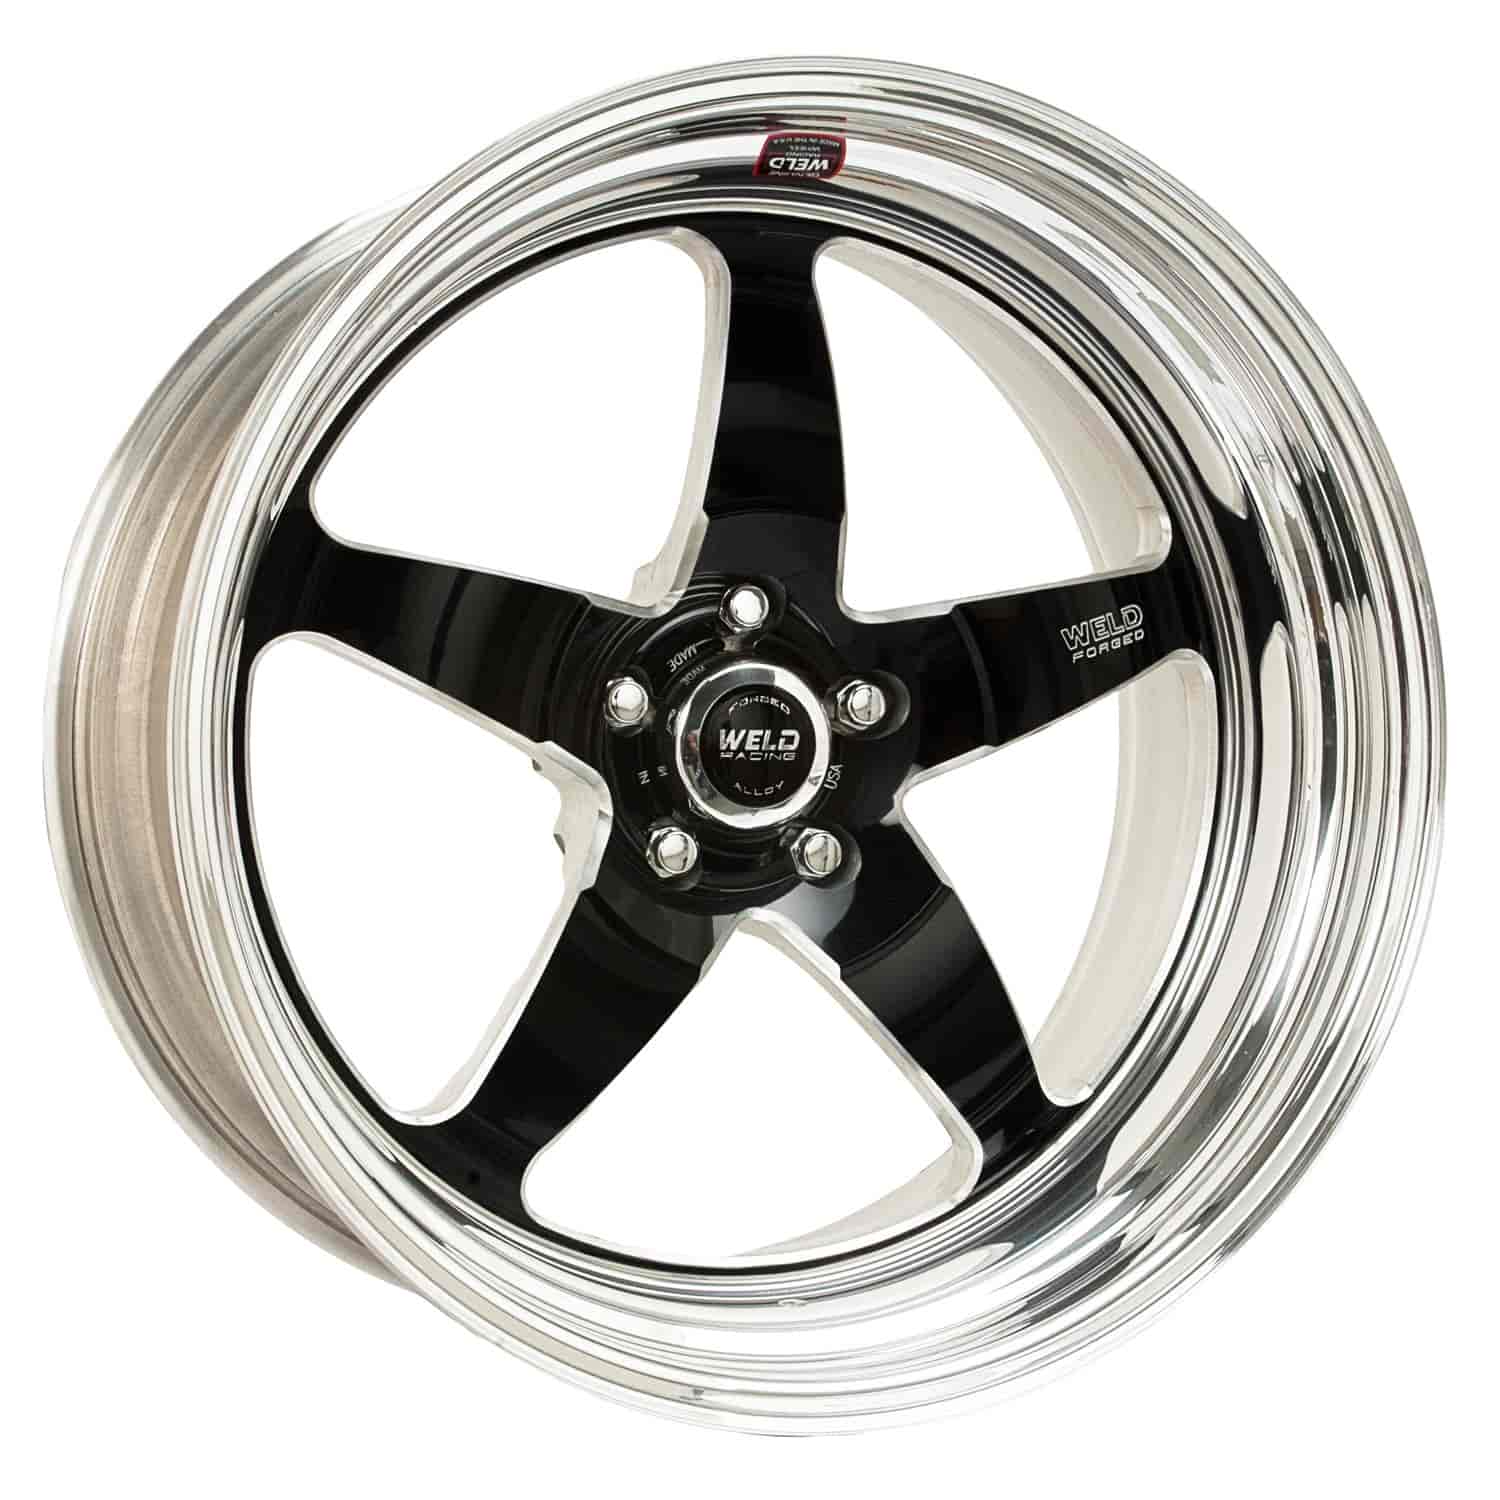 RT-S Series Wheel Size: 17" x 10" Bolt Circle: 5 x 120mm Rear Spacing: 7.20" Black Offset: +44mm